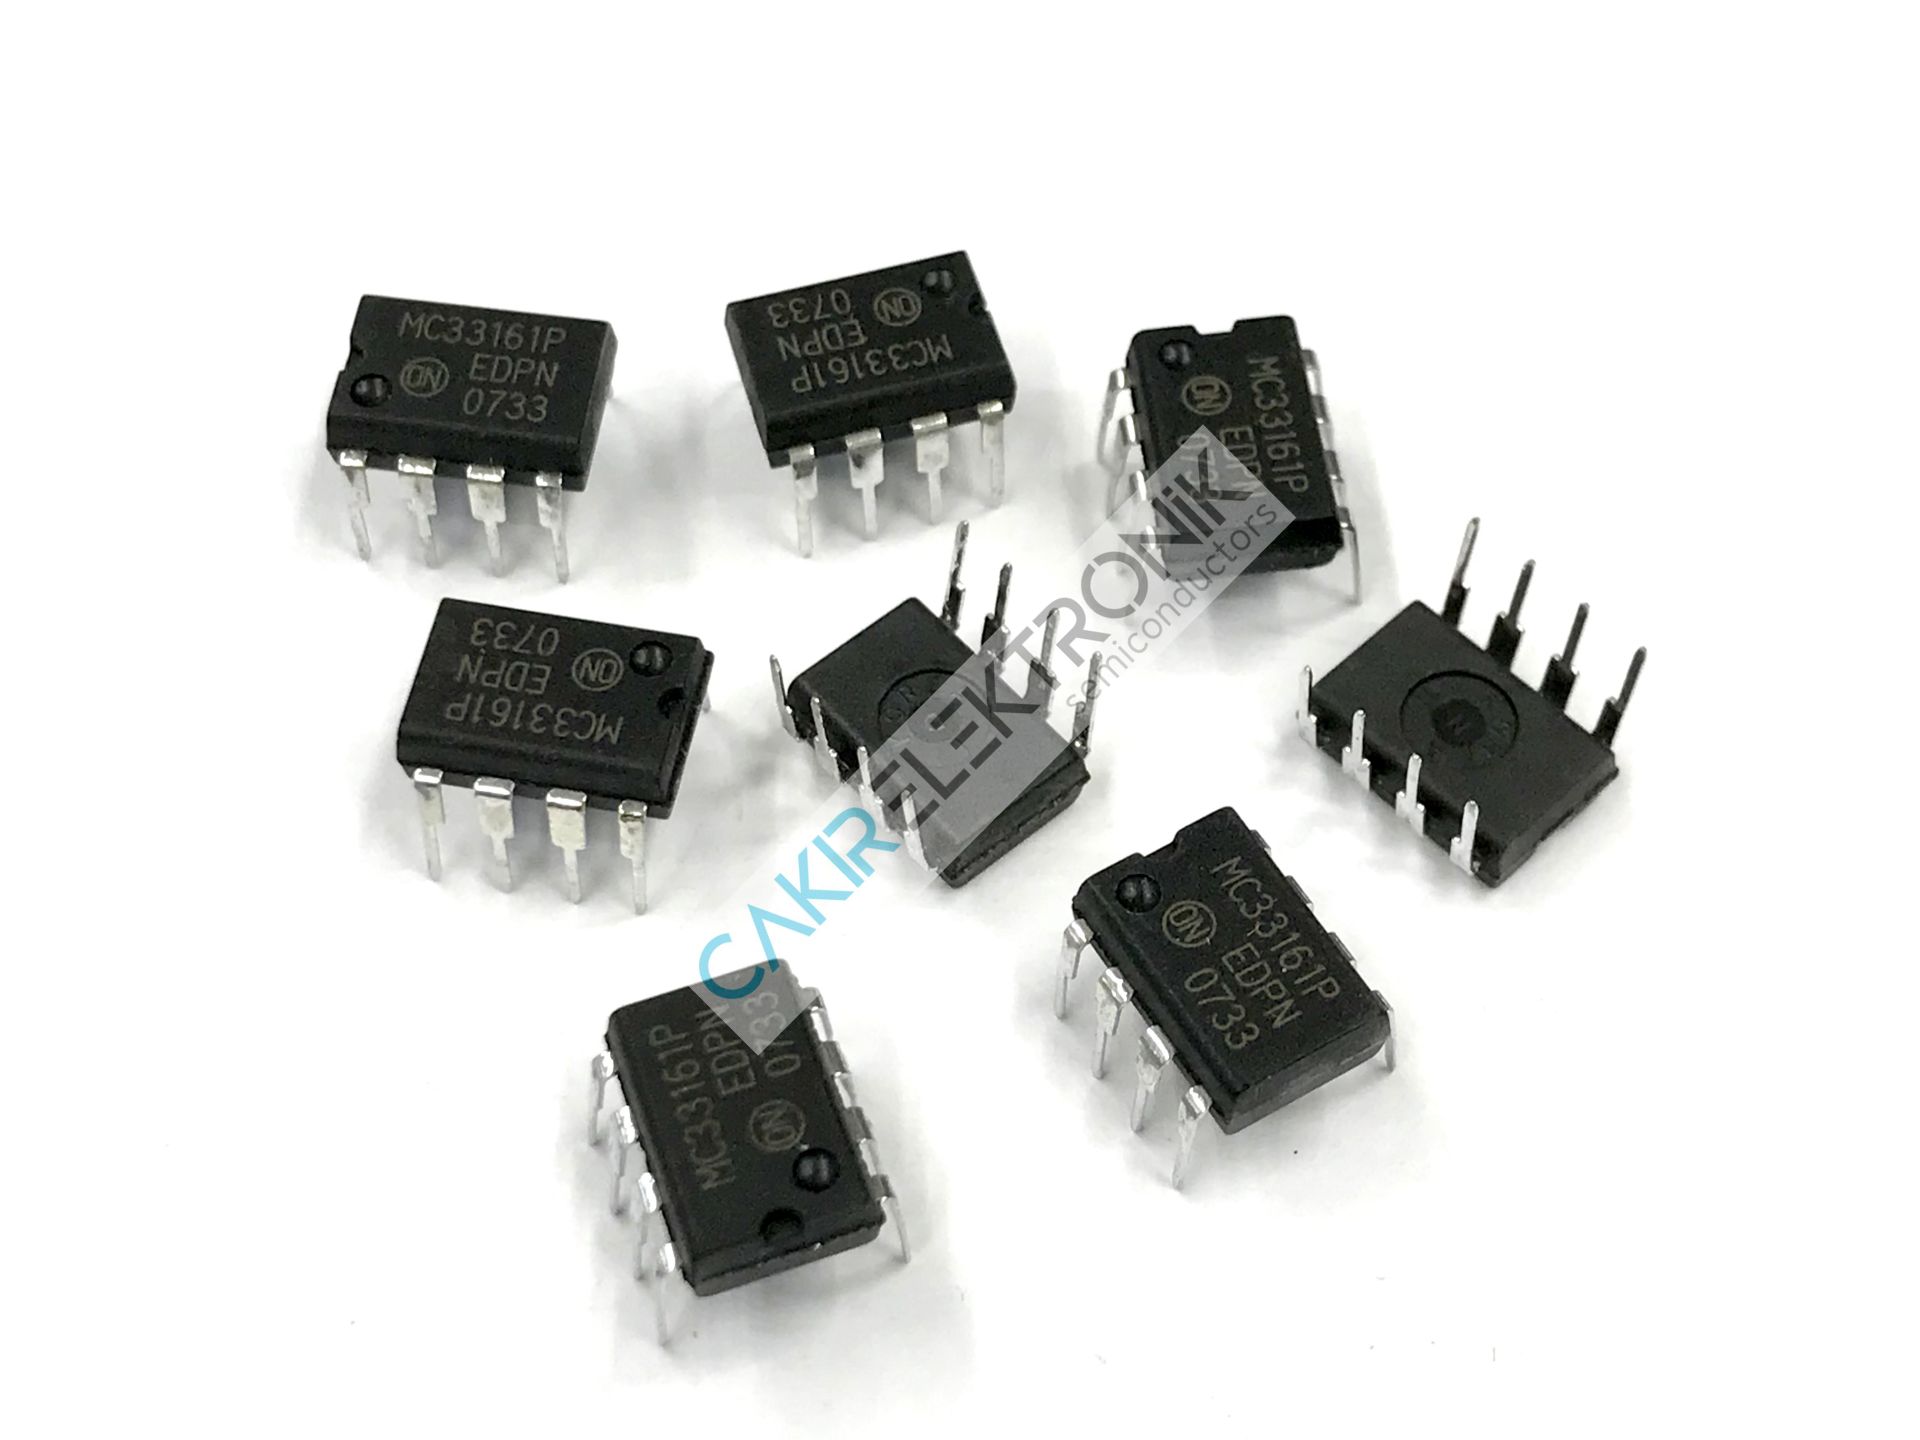 MC33161P - MC33161 -  Voltage Supervisor, Universal Voltage Monitor